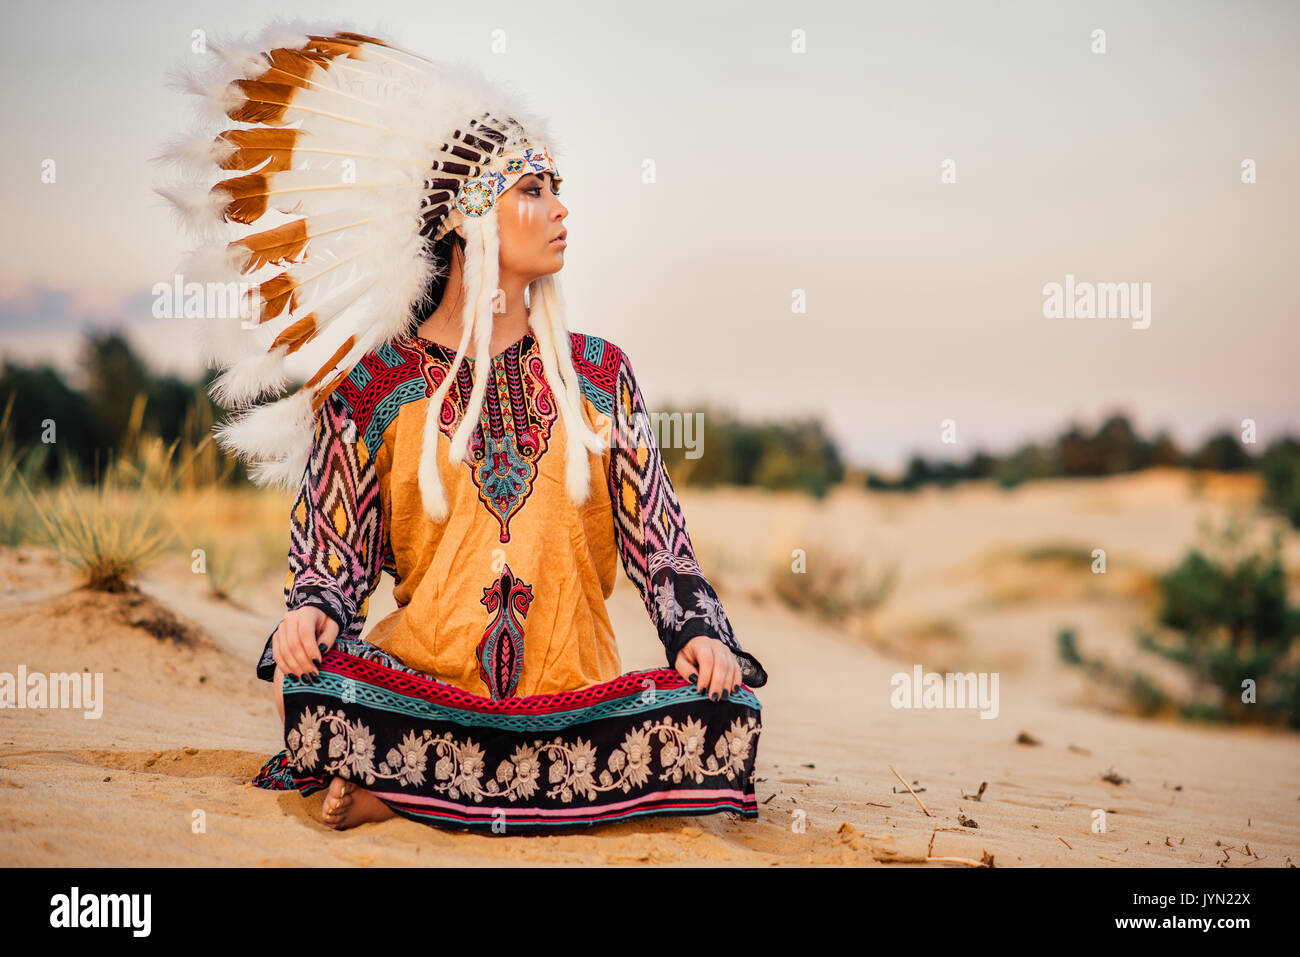 In Native American Indian Girl Kostüm in Yoga sitting Pose, rituelle  Zeremonie. Kopfschmuck aus Federn von Wildvögeln. Cherokee, Navajo Kultur  Stockfotografie - Alamy